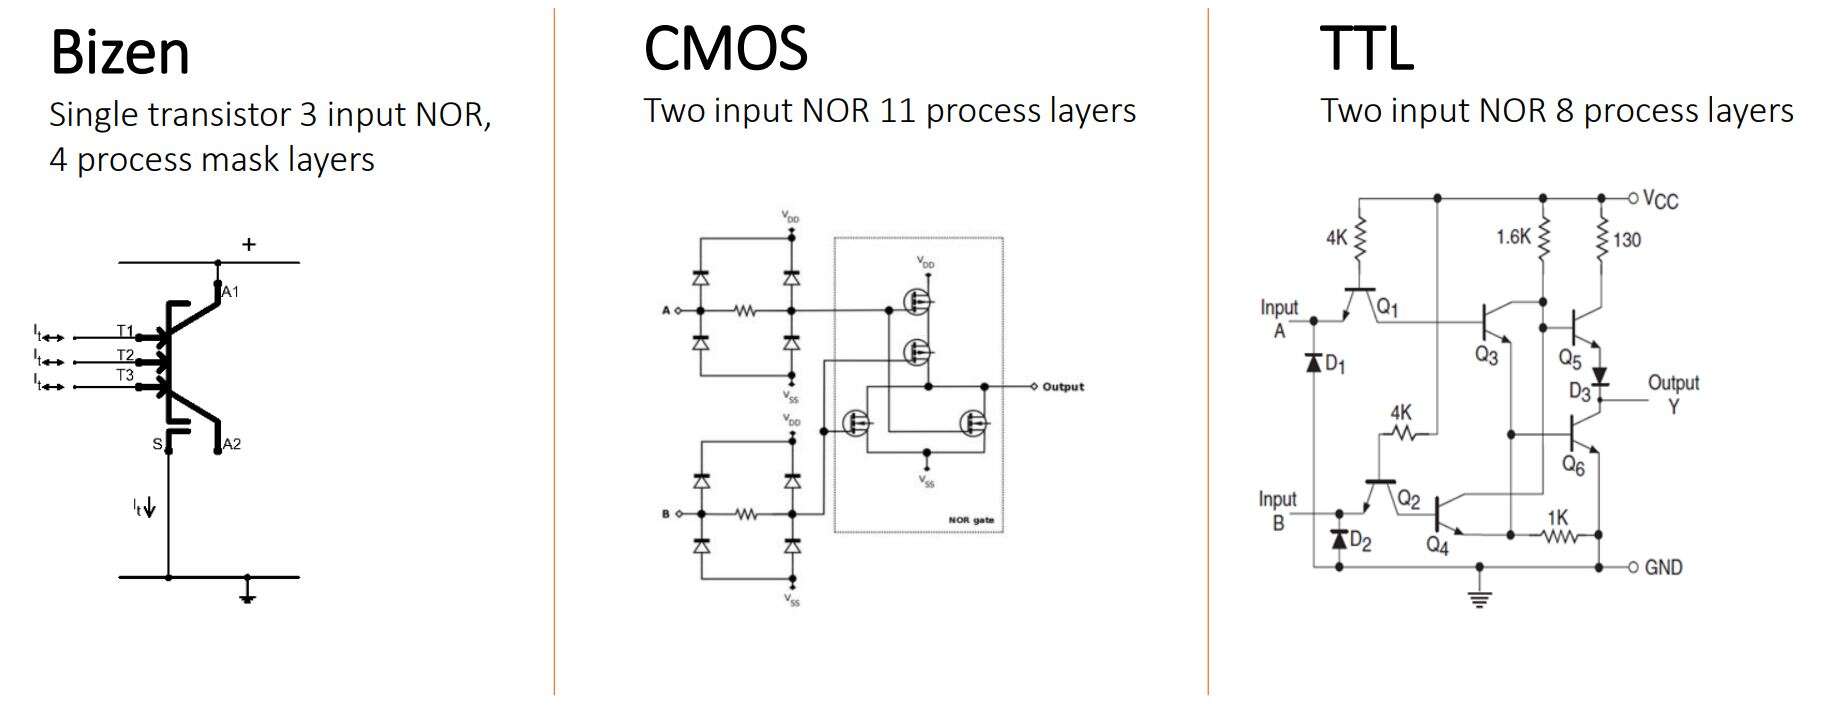 Comparison between Bizen, CMOS and TTL circuits